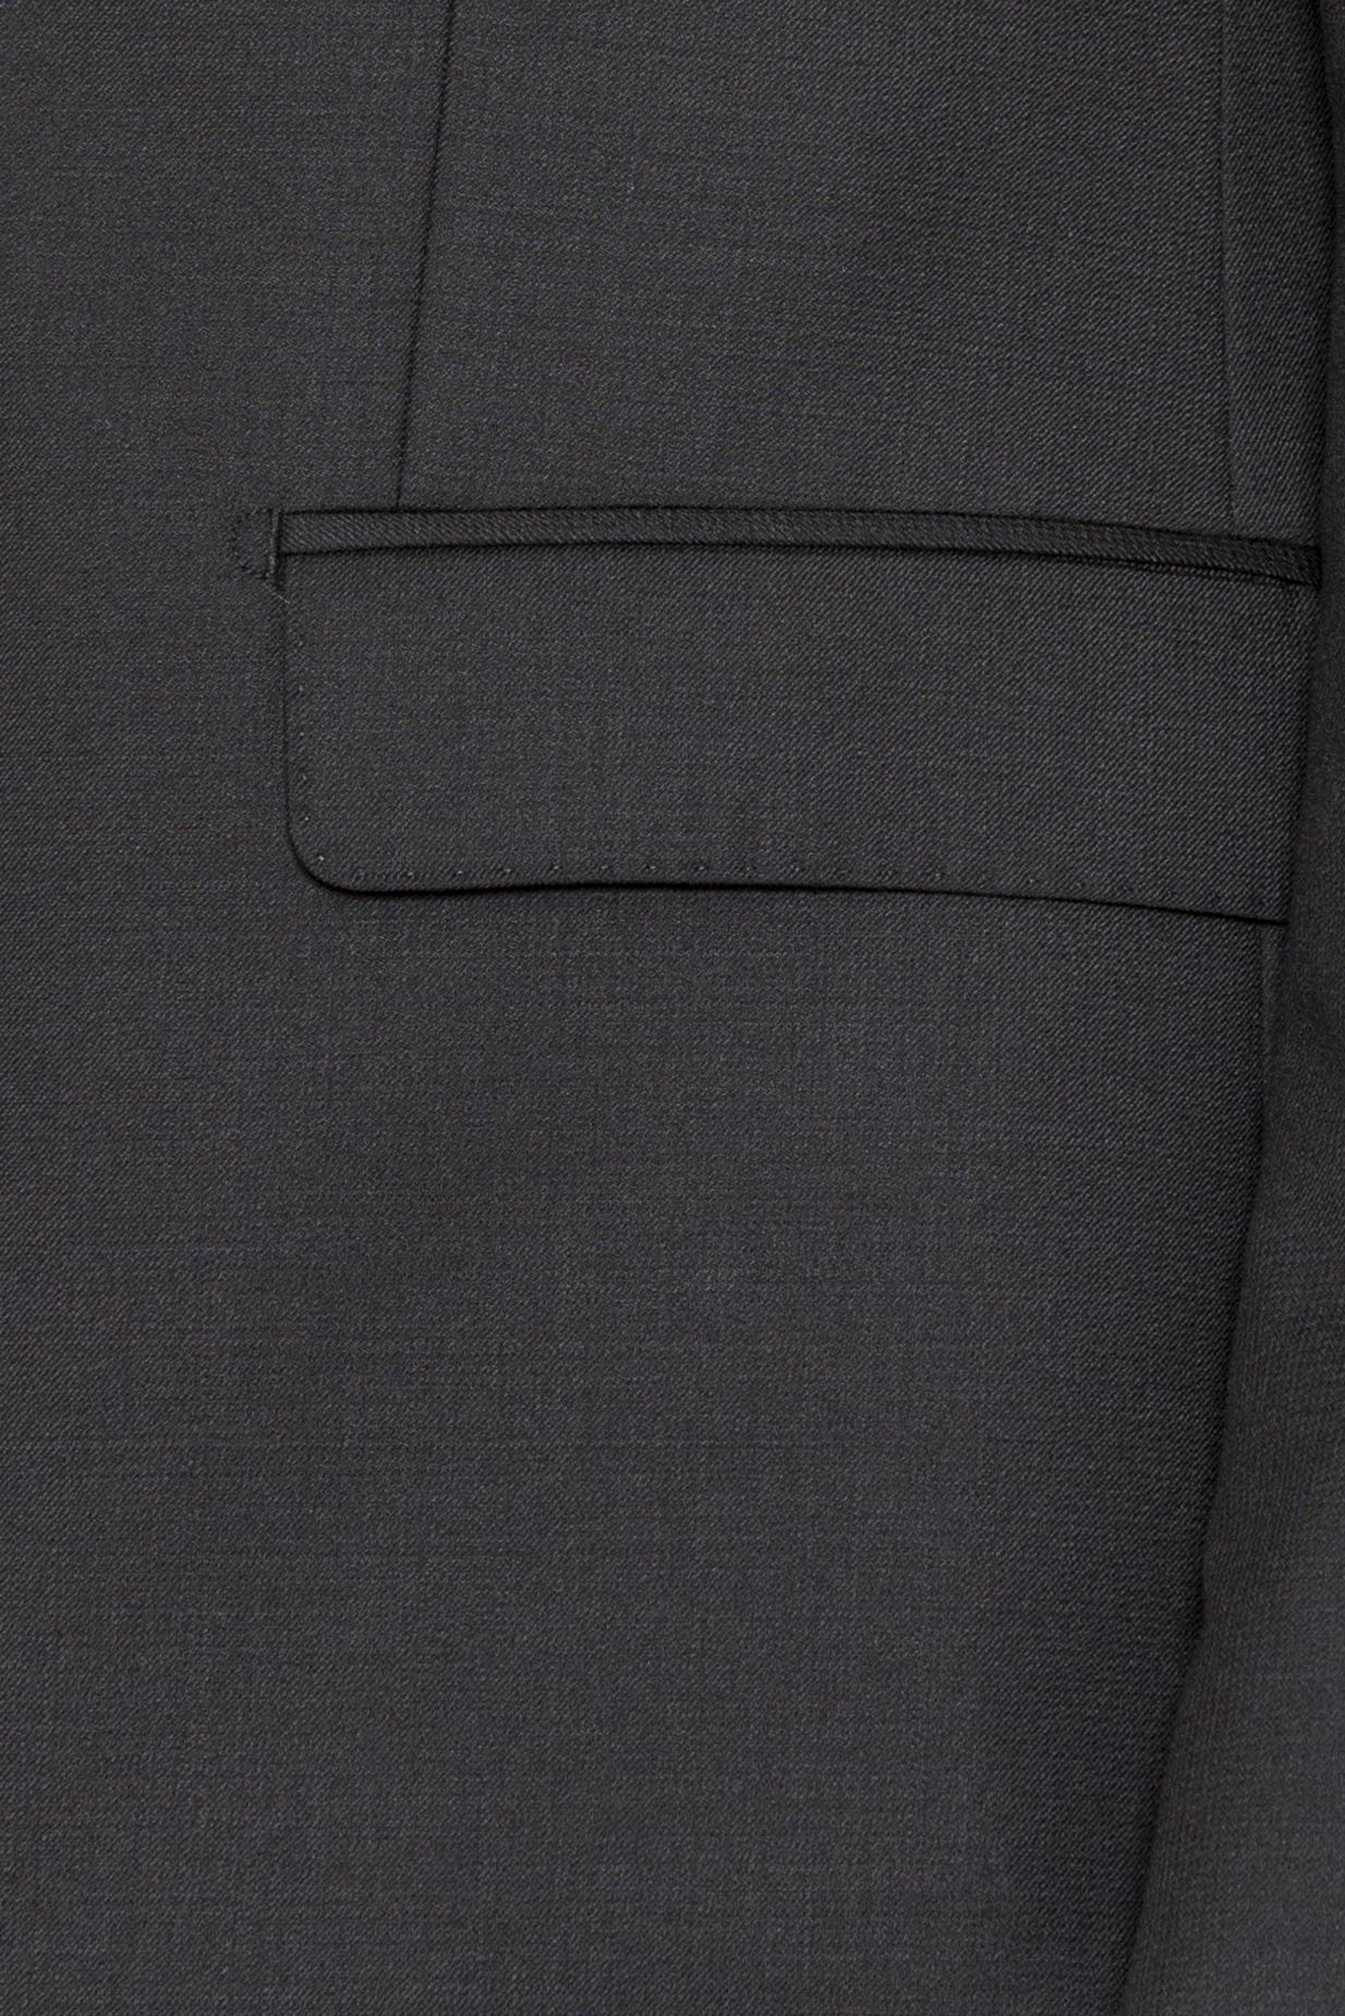 Cambridge Suit F275 Black Closeup